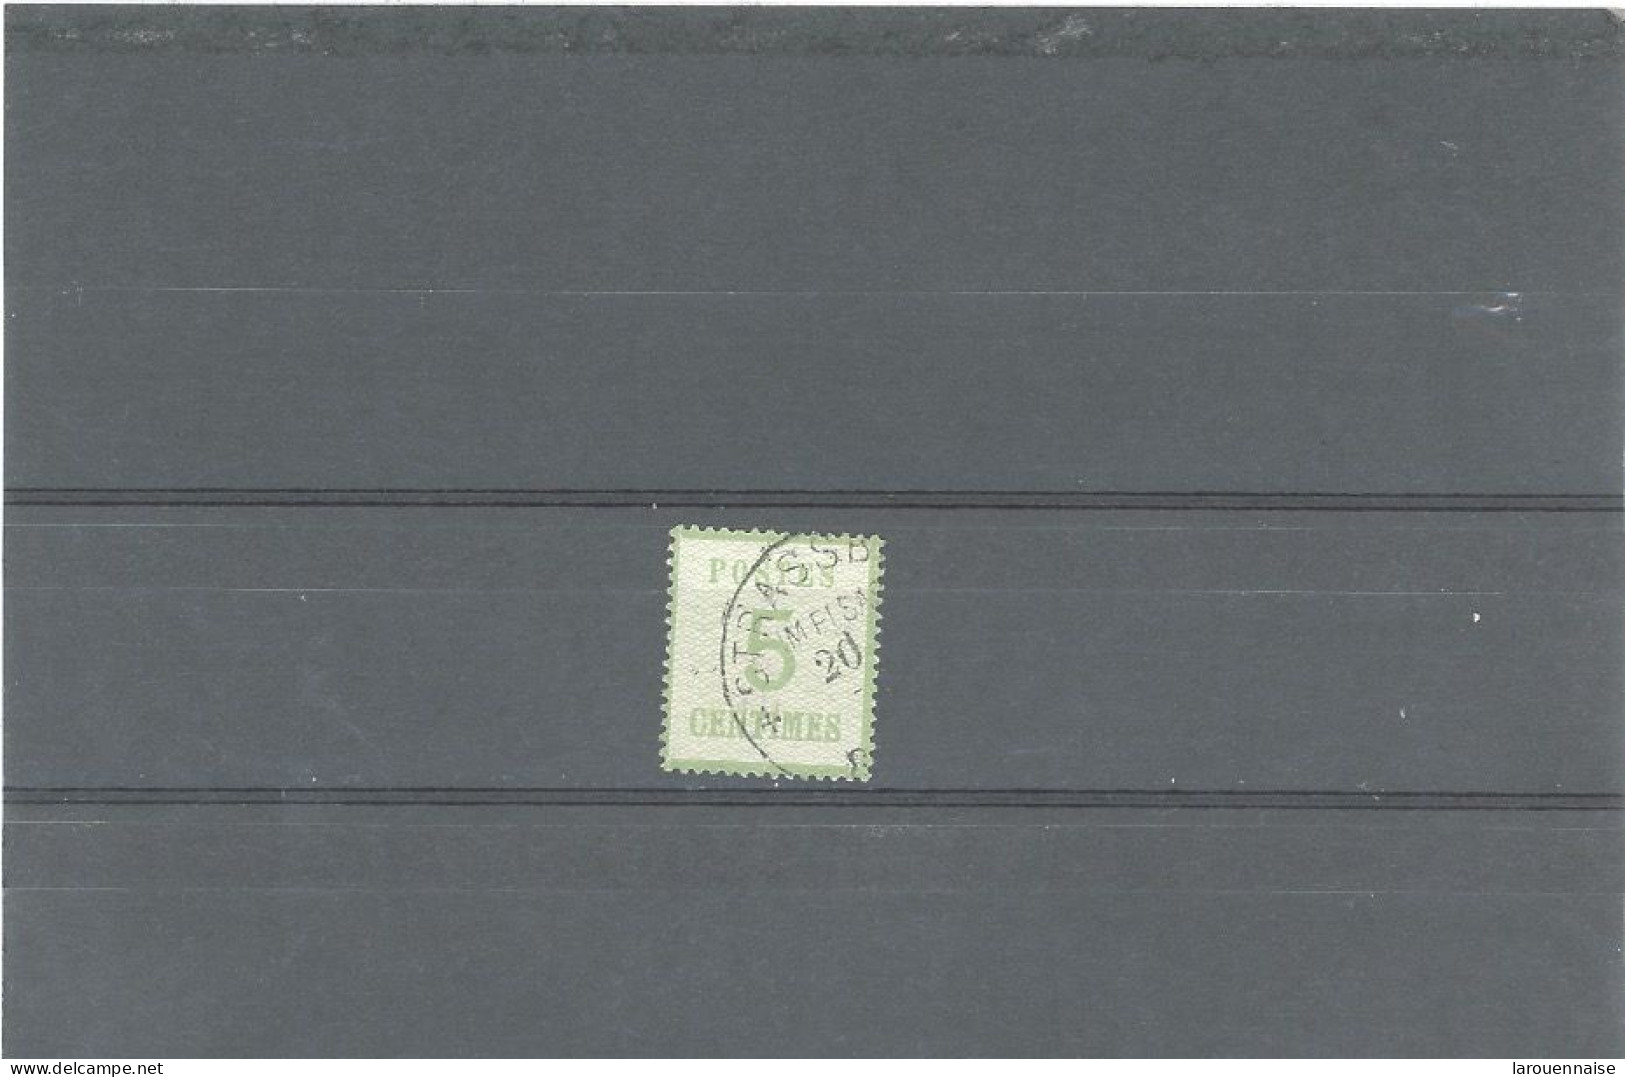 ALSACE LORAINE -1870 -N°4 -5c VERT JAUNE  -Obl -STRASSBURG - Used Stamps